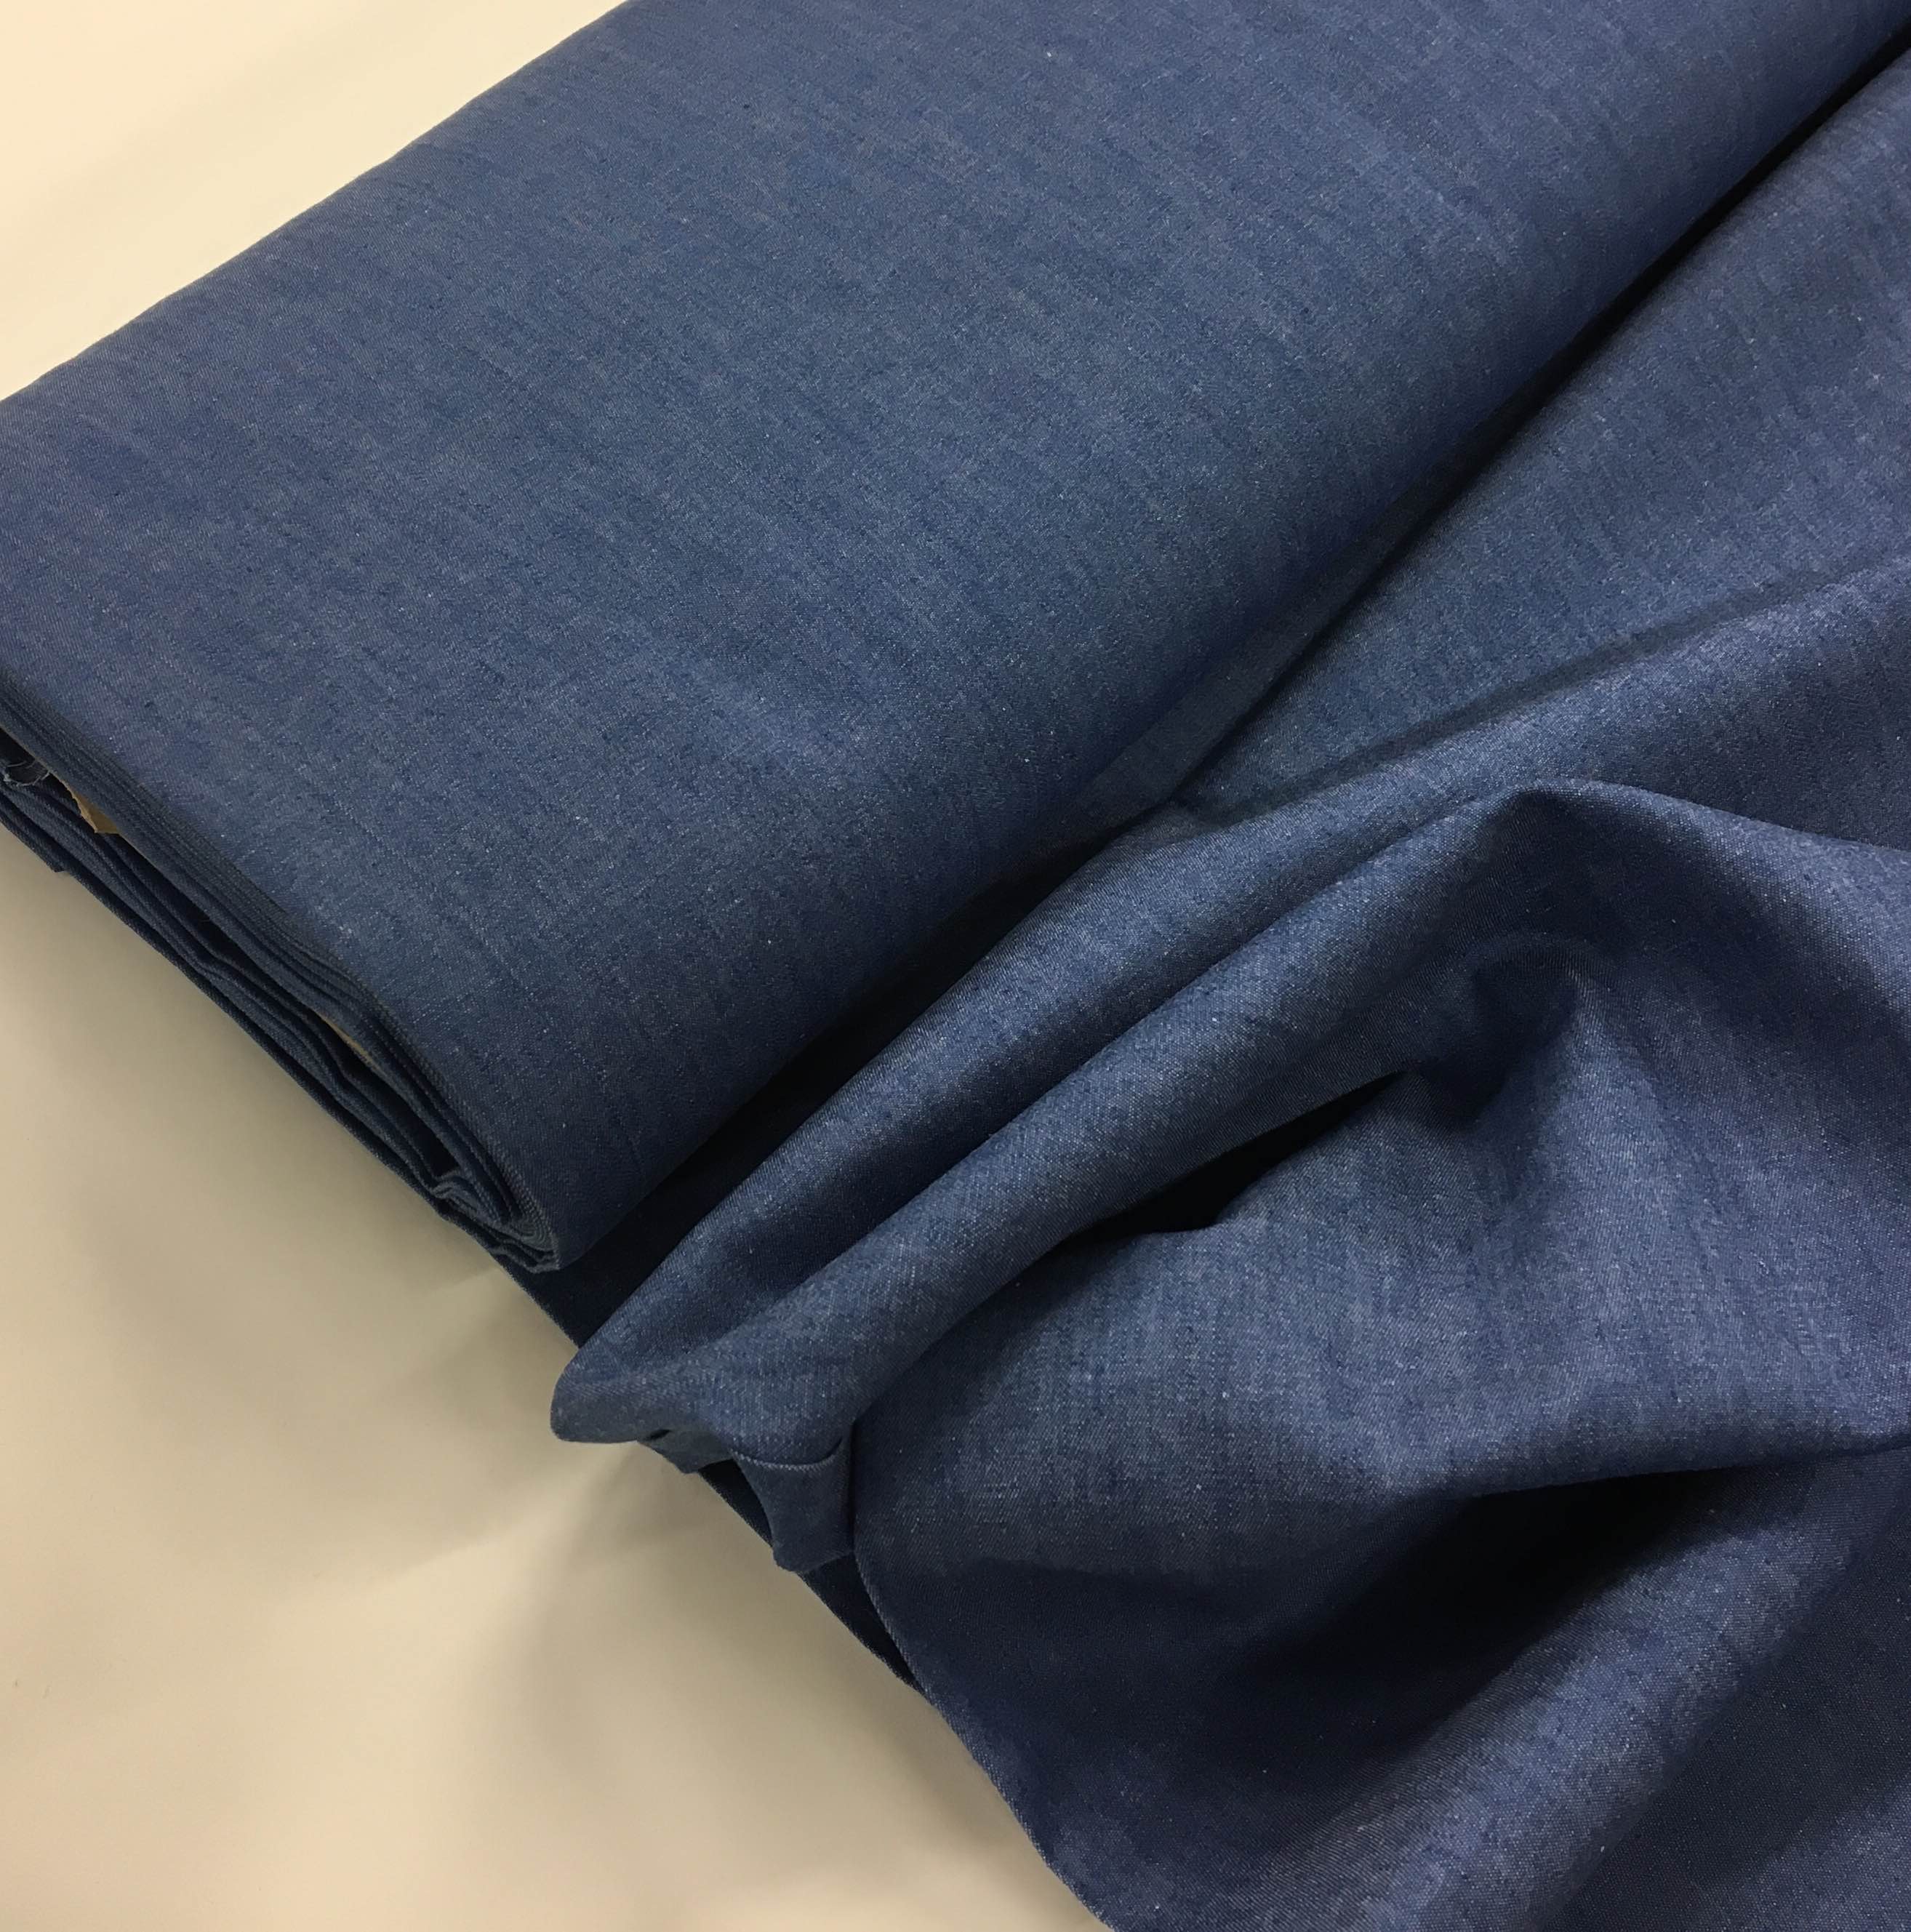 Classic Blue Chambray Fabric 100% Cotton